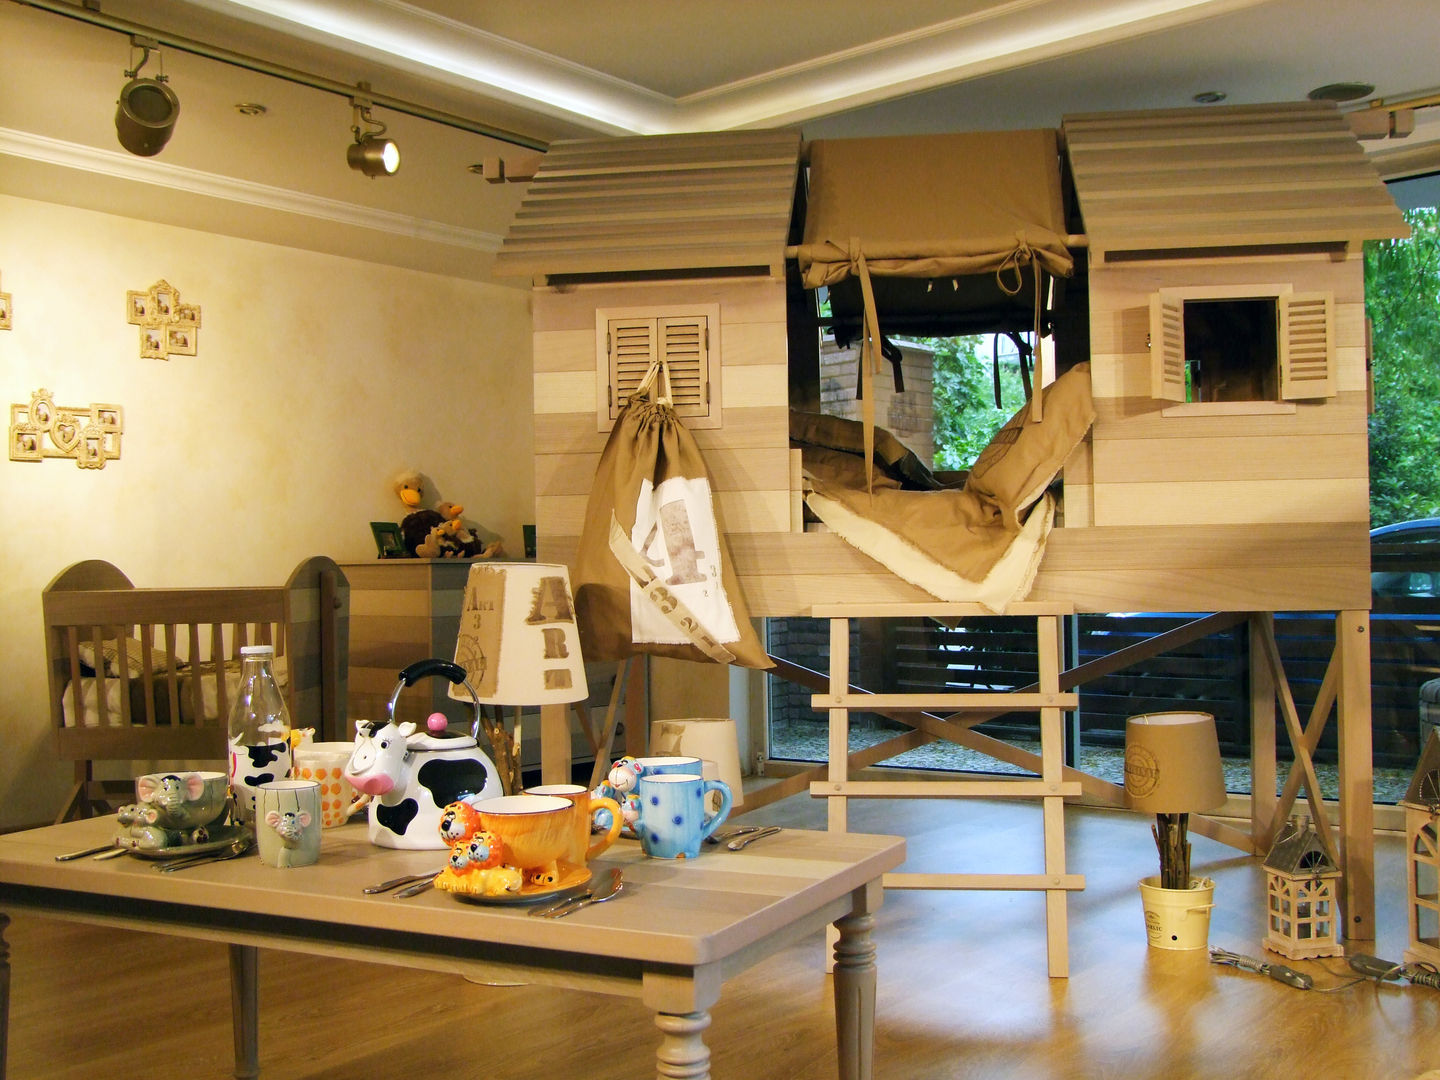 LACOTE Çiftlik temalı bebek ve çocuk odası , Lacote Design Lacote Design ห้องนอนเด็ก เตียงเด็กและเปลเด็ก